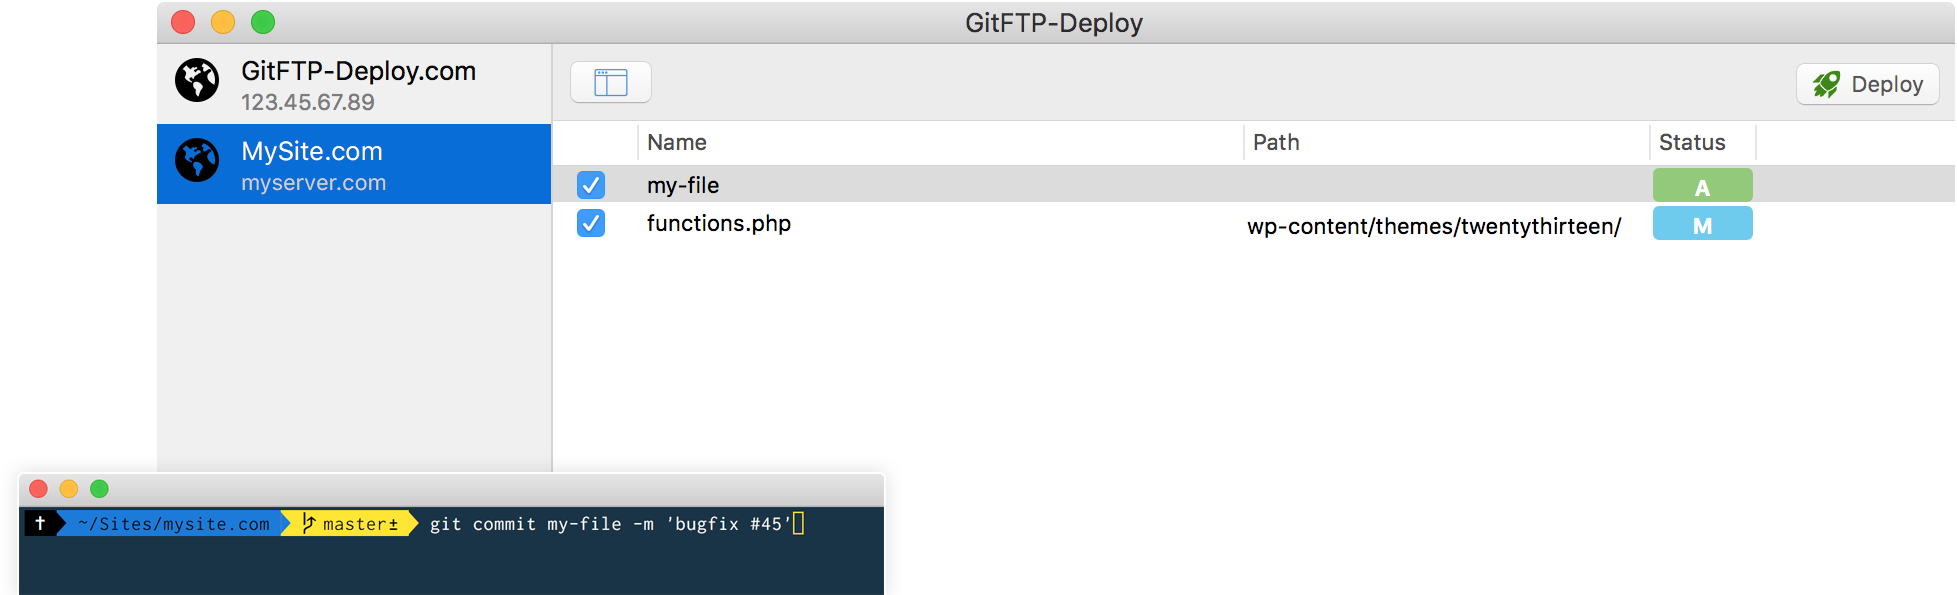 GitFTP-Deploy for Mac 2.6.2 注册版 - 优秀的FTP 上传部署工具